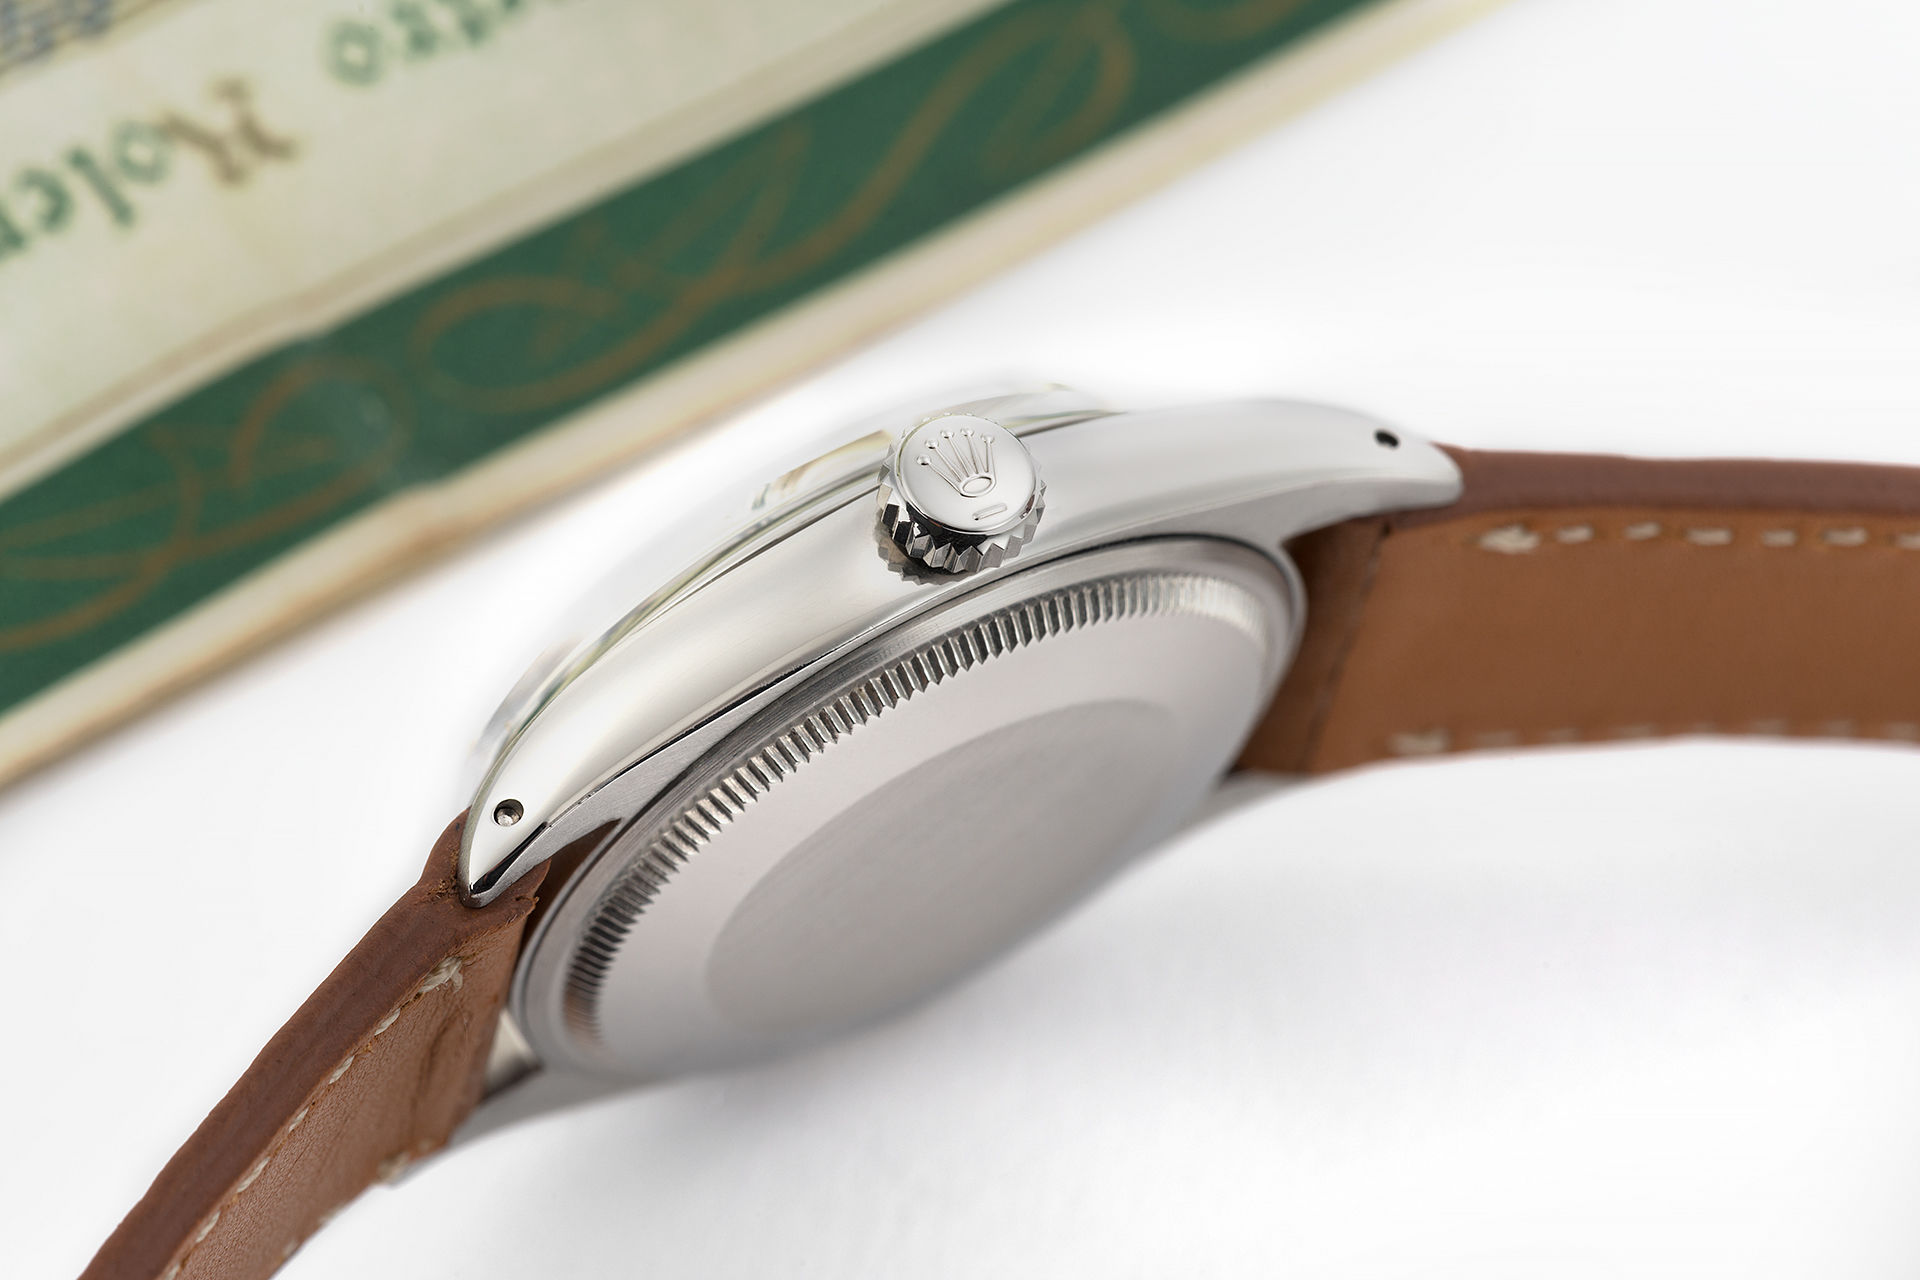 ref 1500 | 'Vintage Model' Original Certificate | Rolex Oyster Perpetual Date